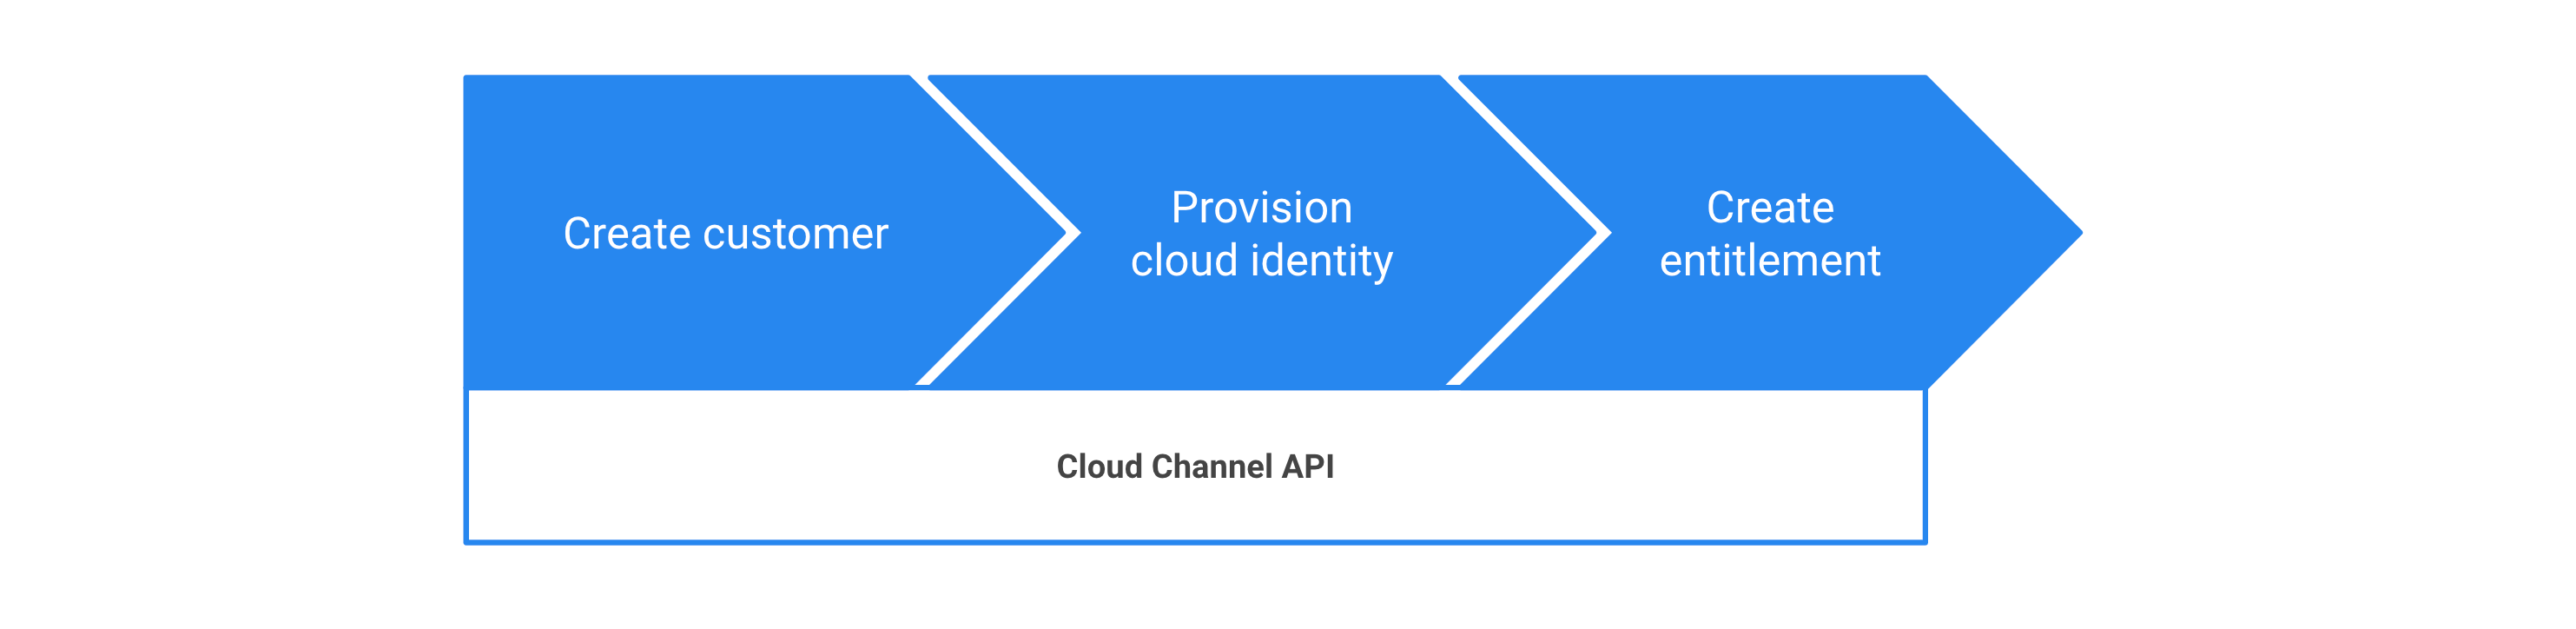 通过 Cloud Channel API 配置 Google Workspace 的步骤